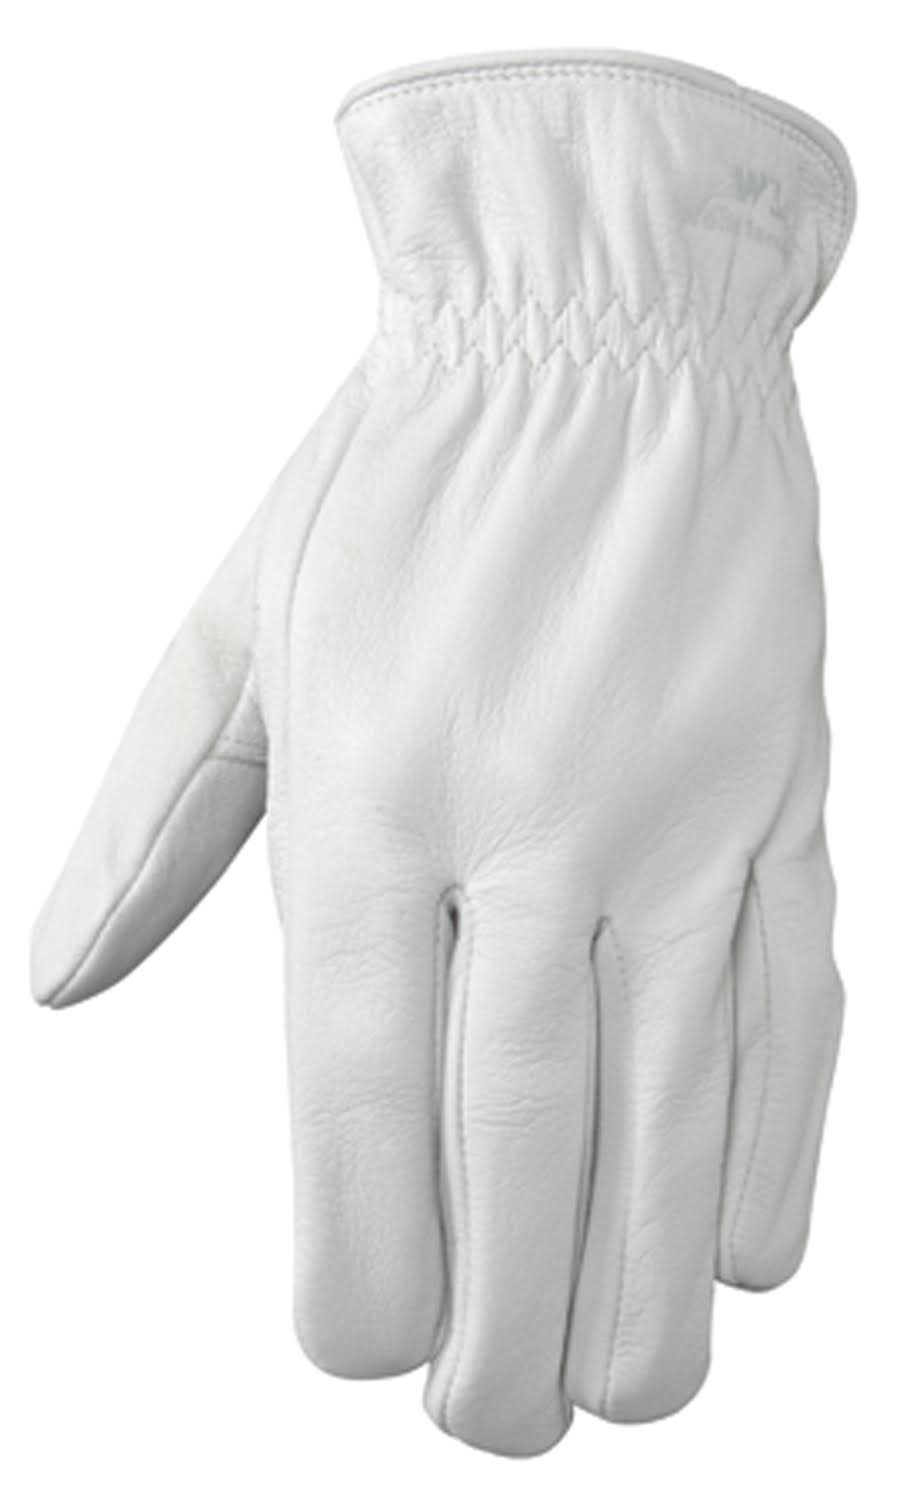 Wells Lamont 1720XL Grain Goatskin Full Leather Work Gloves - XL, White